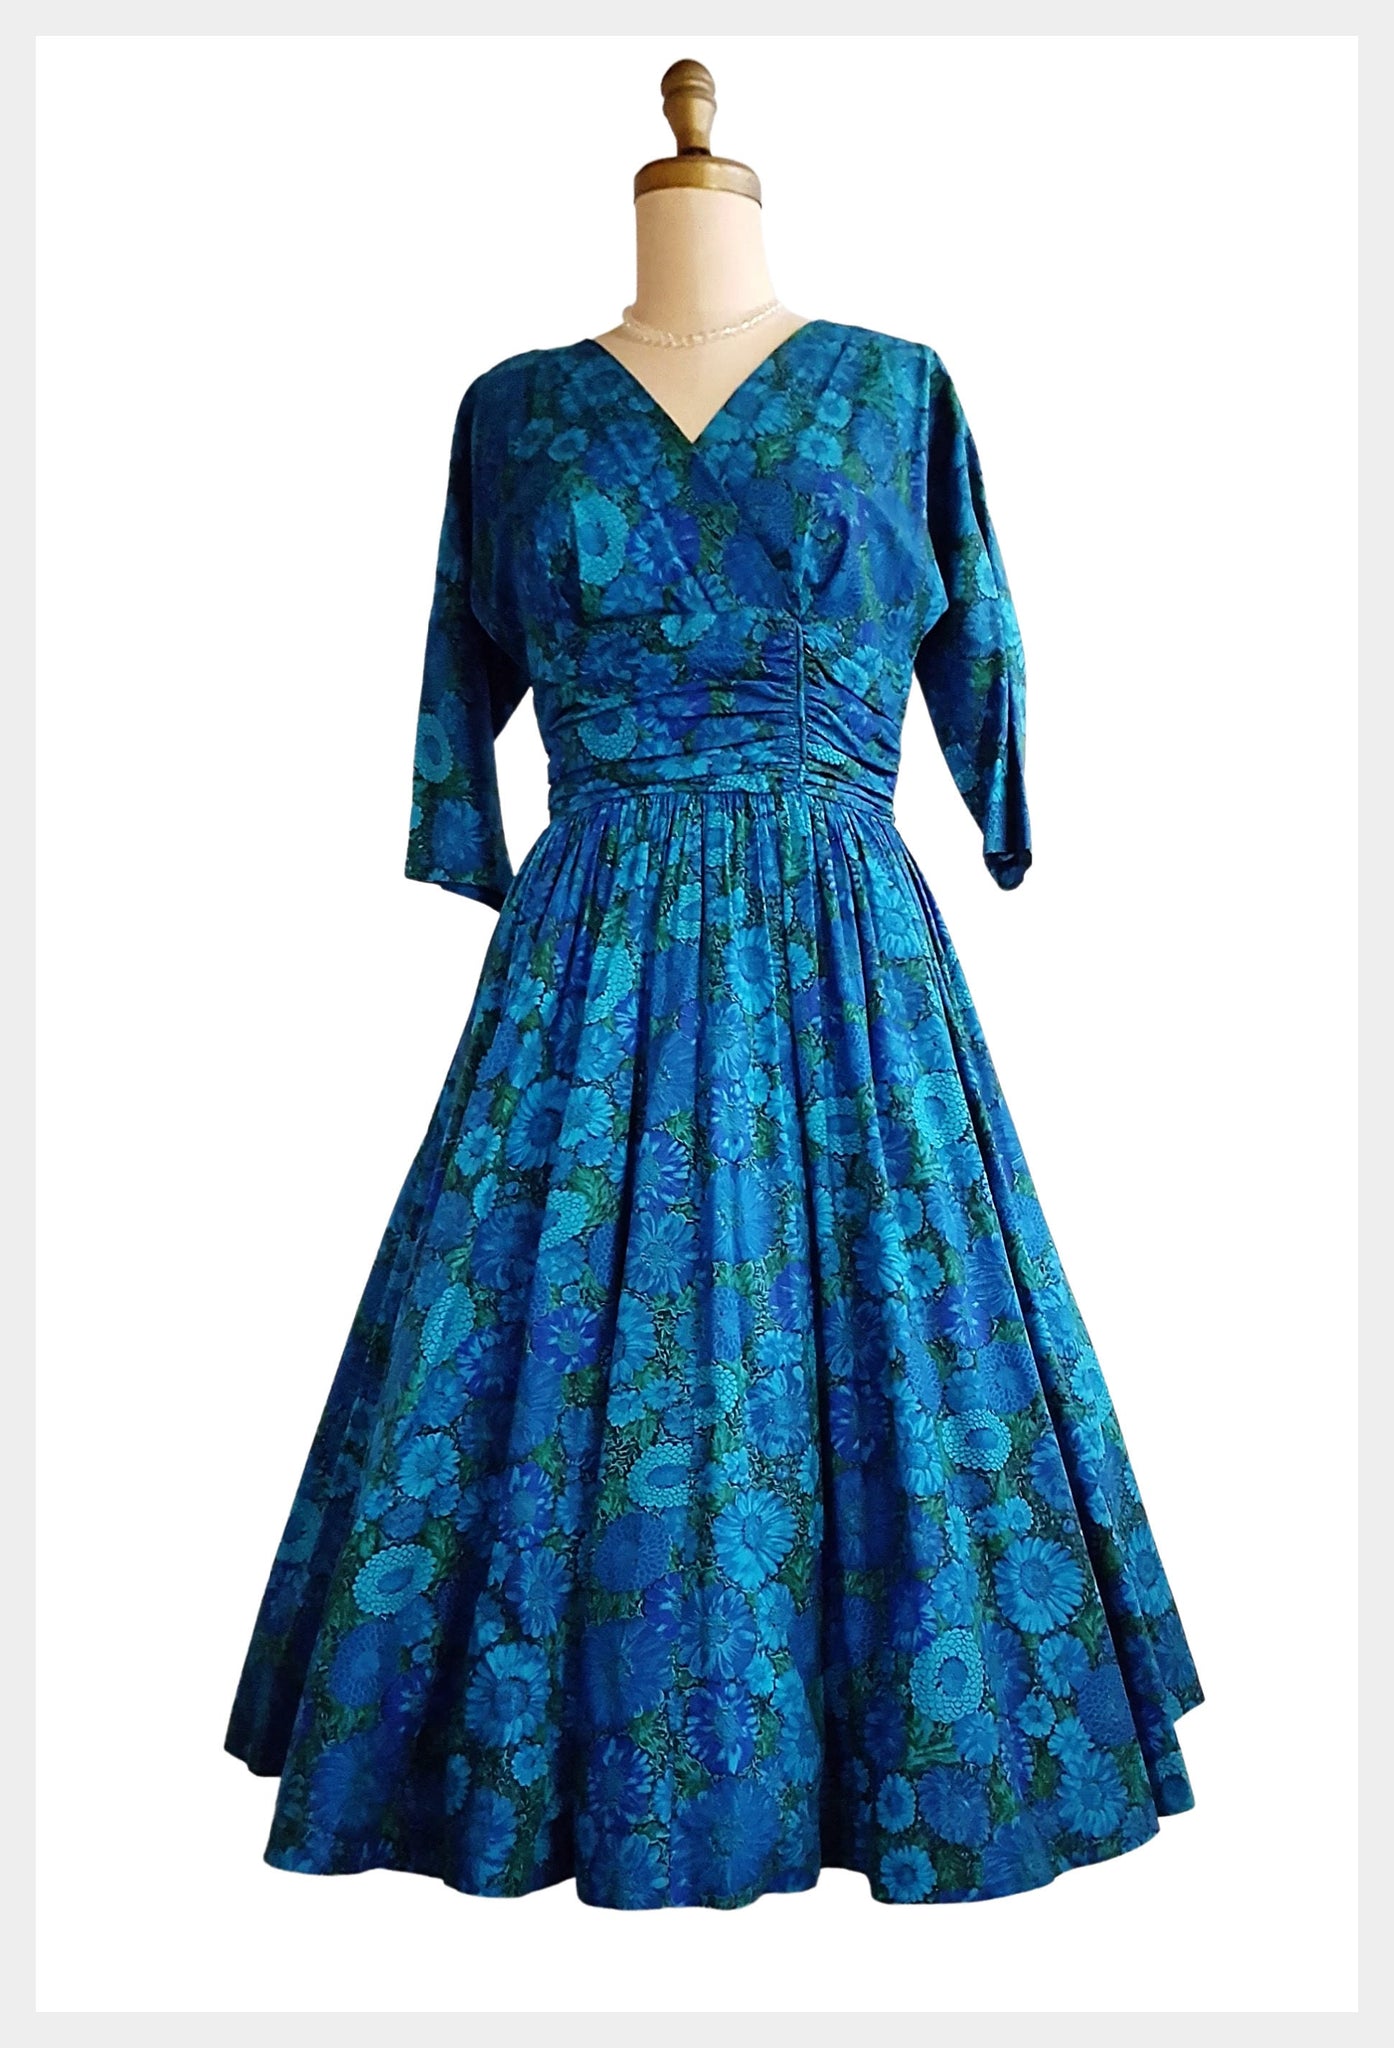 1950s blue floral cotton full skirt dress size medium